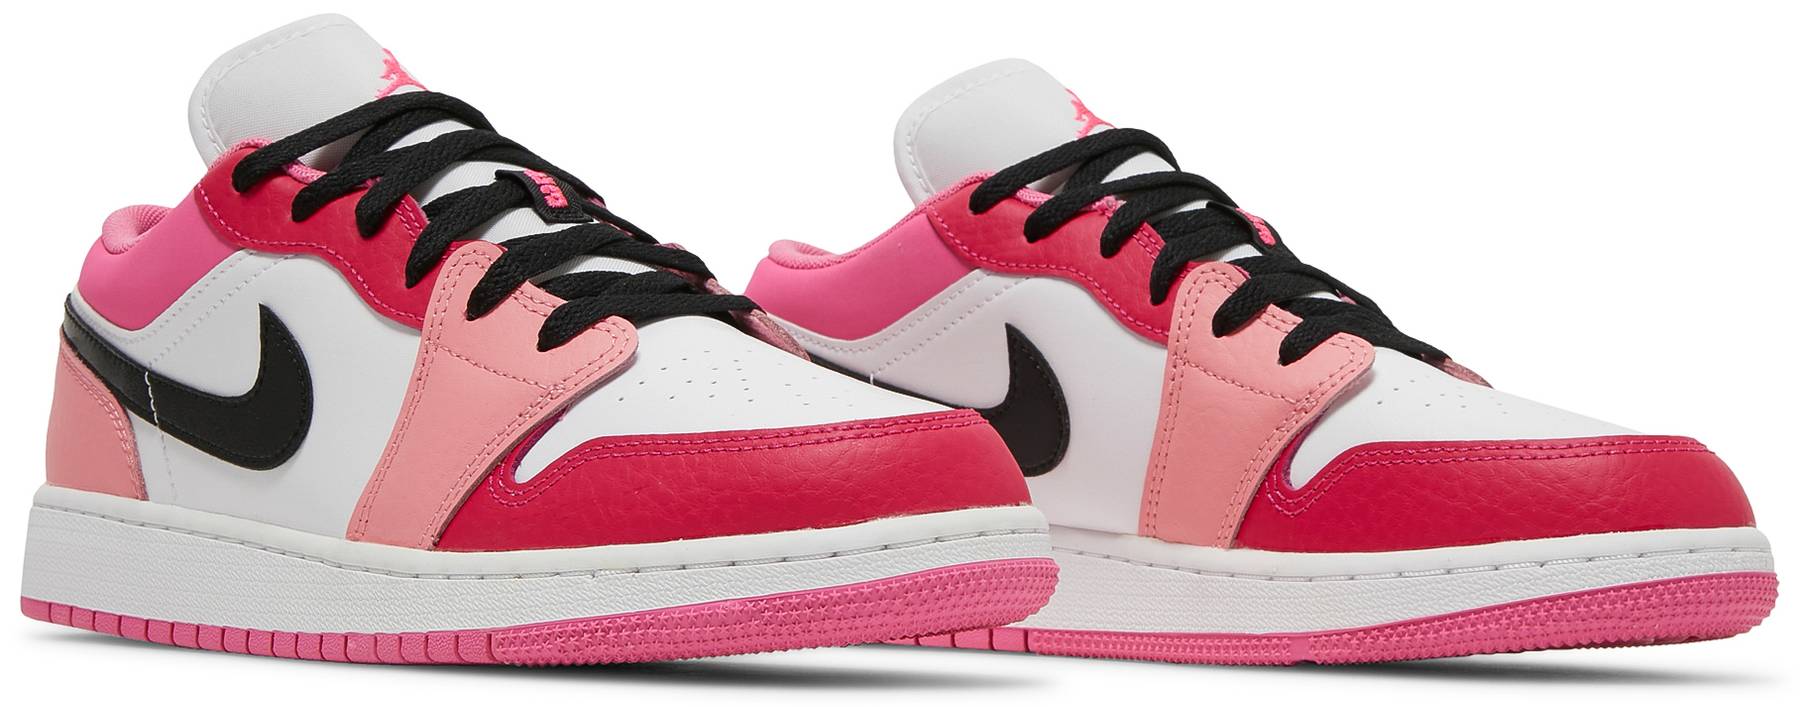 Nike Air Jordan 1 Low Pink Red (GS) Women's